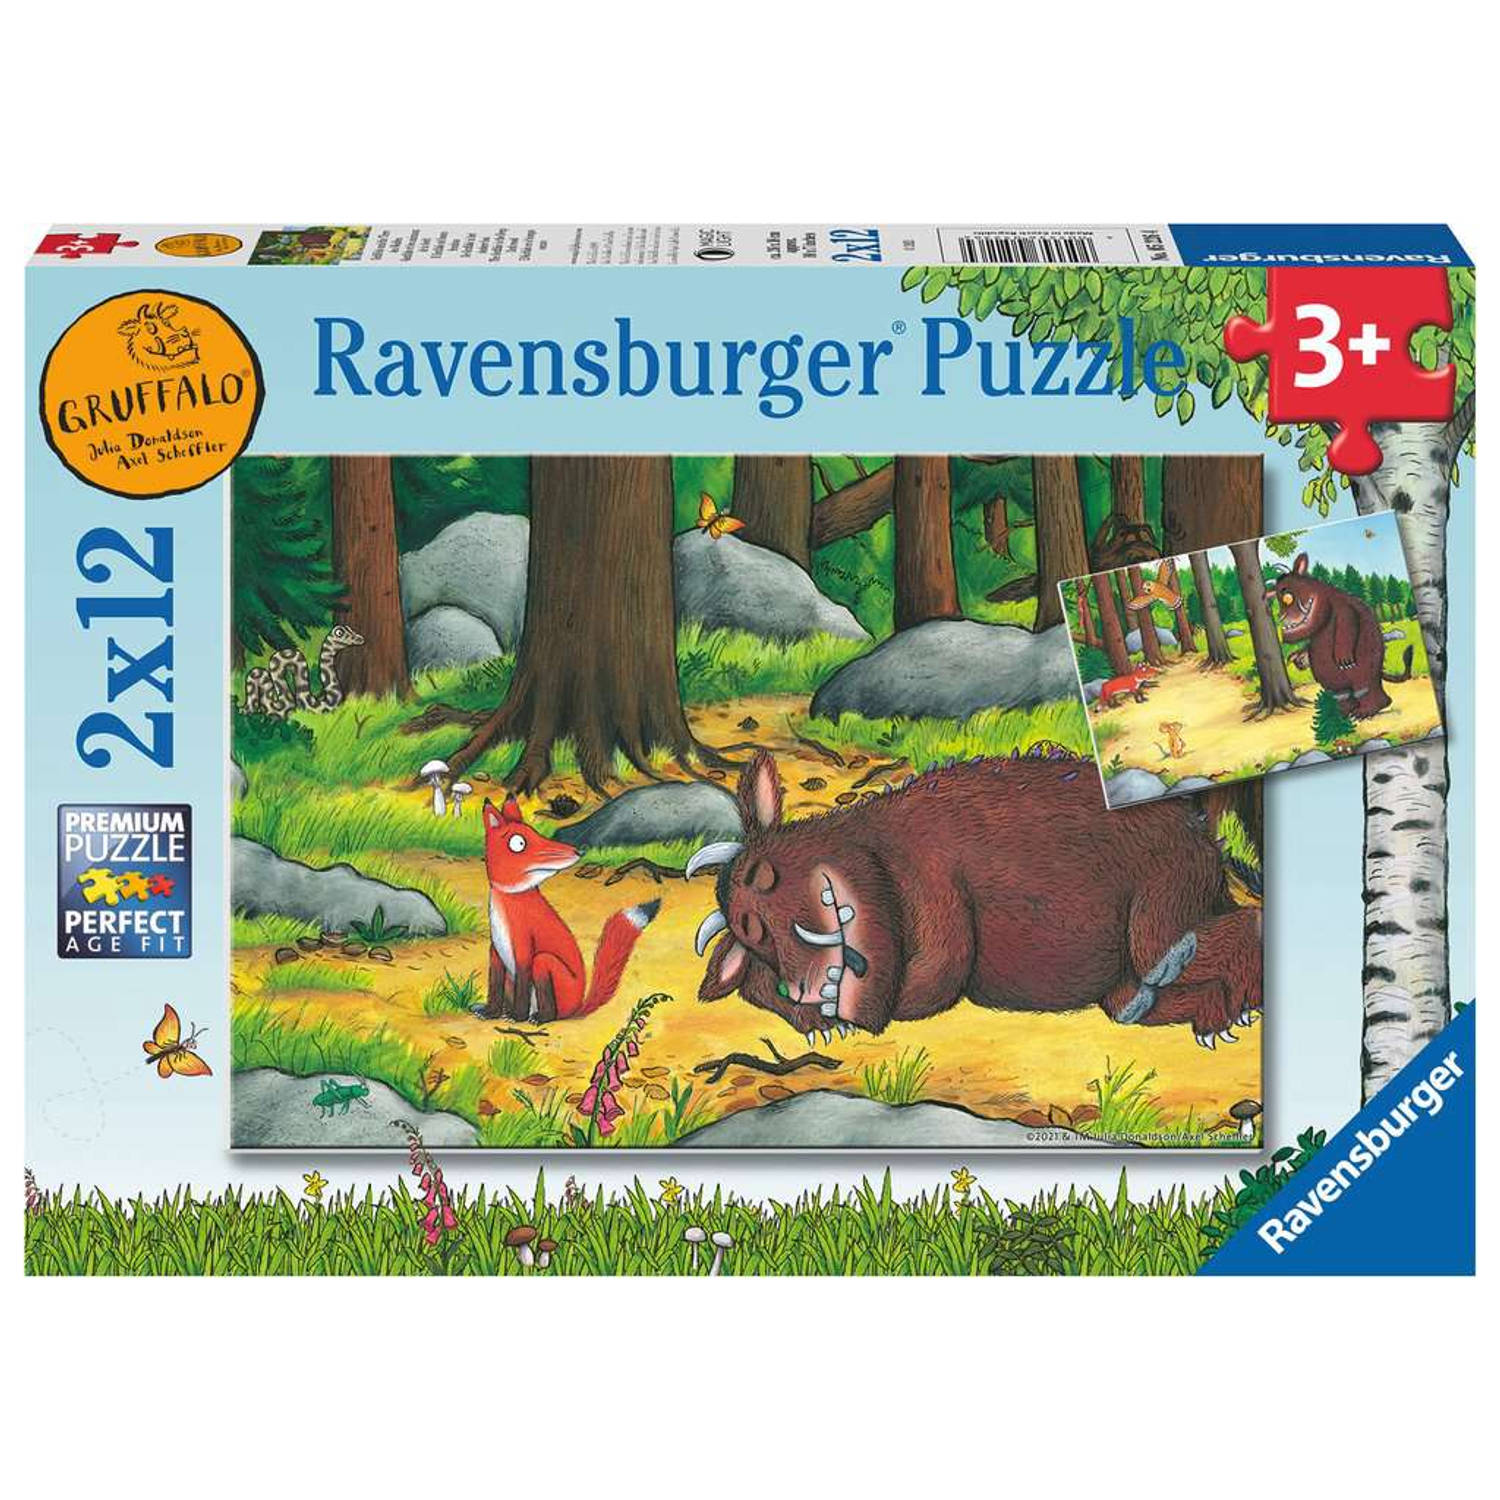 Ravensburger puzzel The Gruffalo 2x12pcs